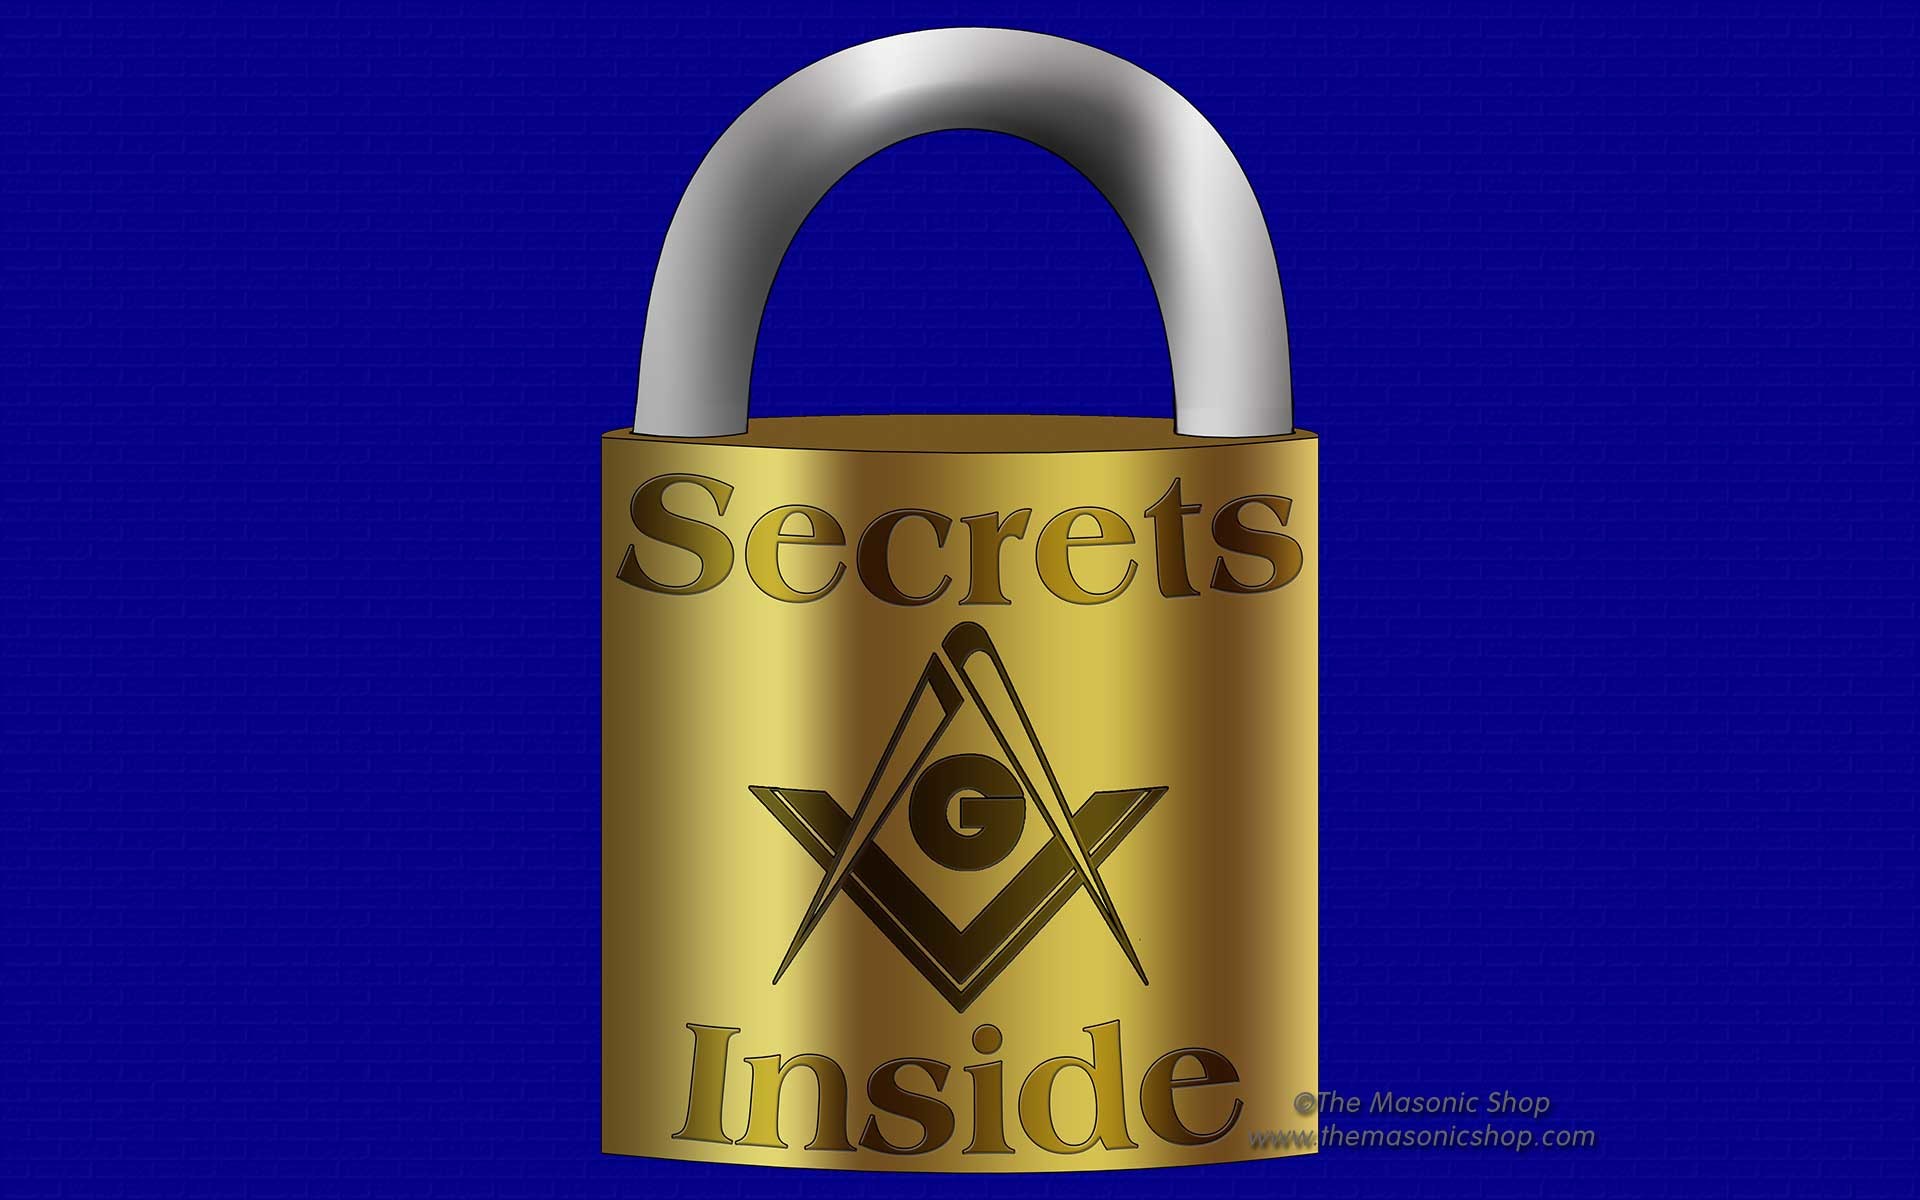 1920x1200 Masonic Logo Wallpaper Masonic secrets